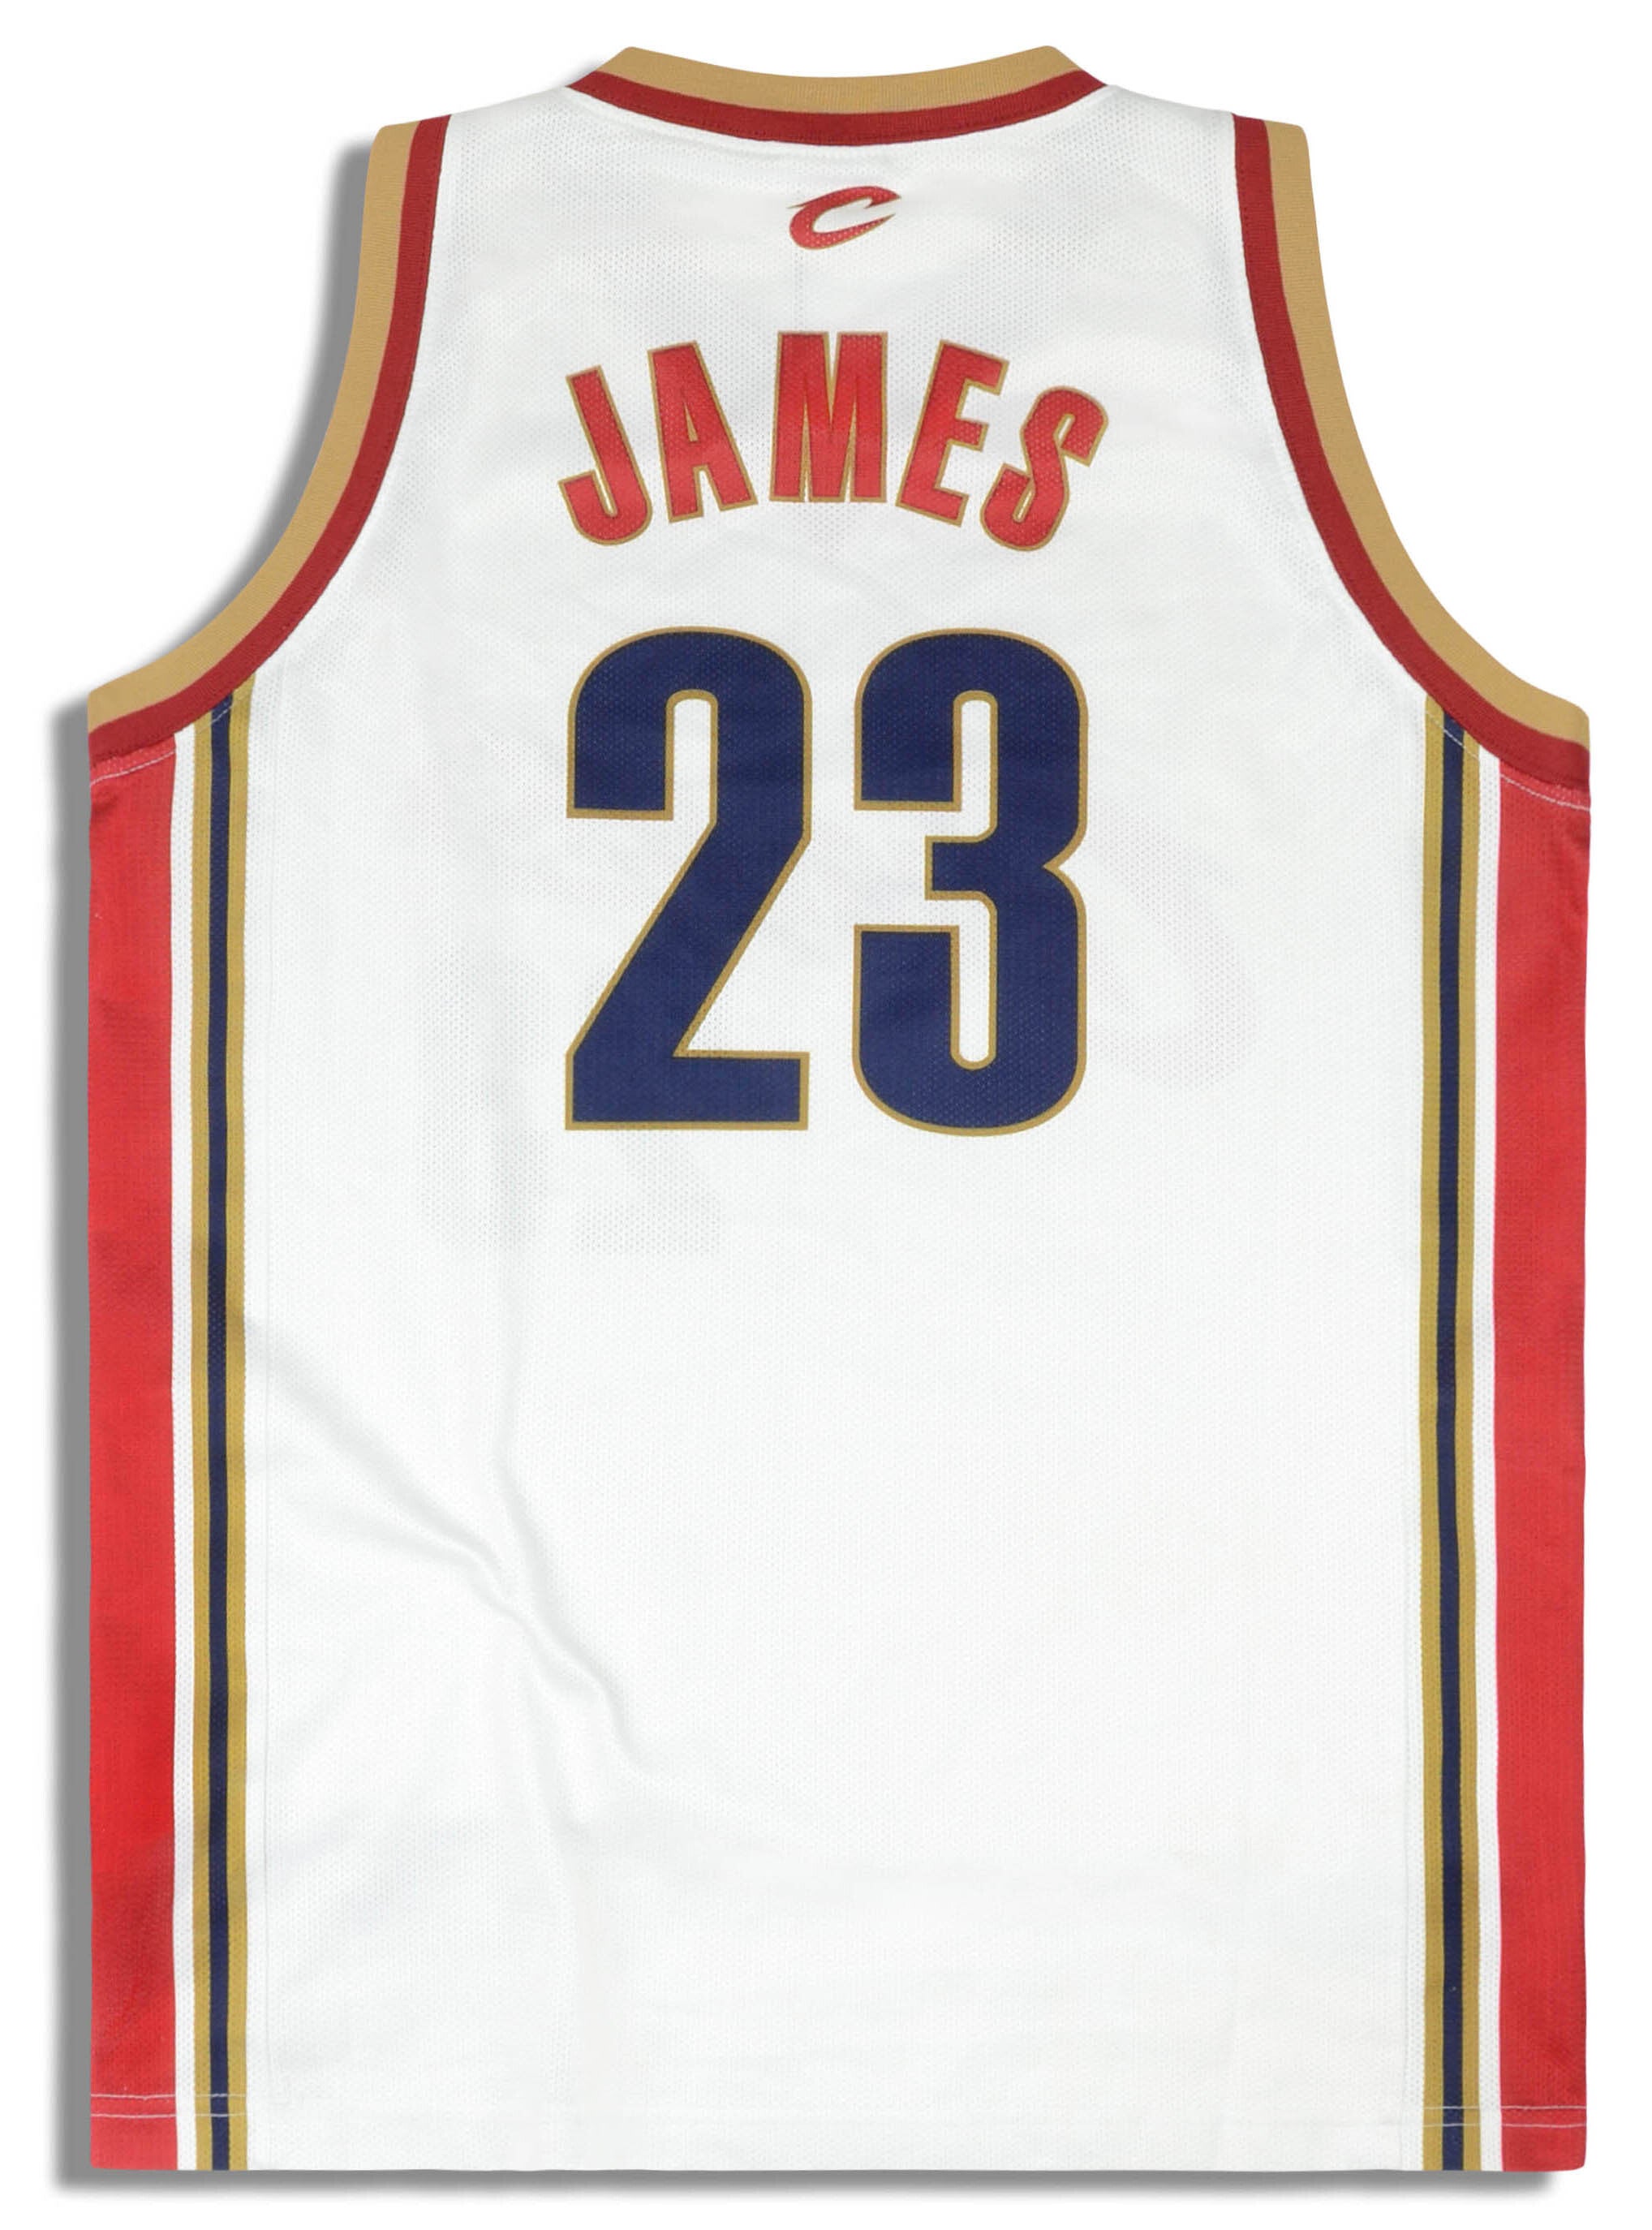 LeBron James Throwback Lakers Jerseys  Vintage Miami Heat Jerseys -  Classic American Sports